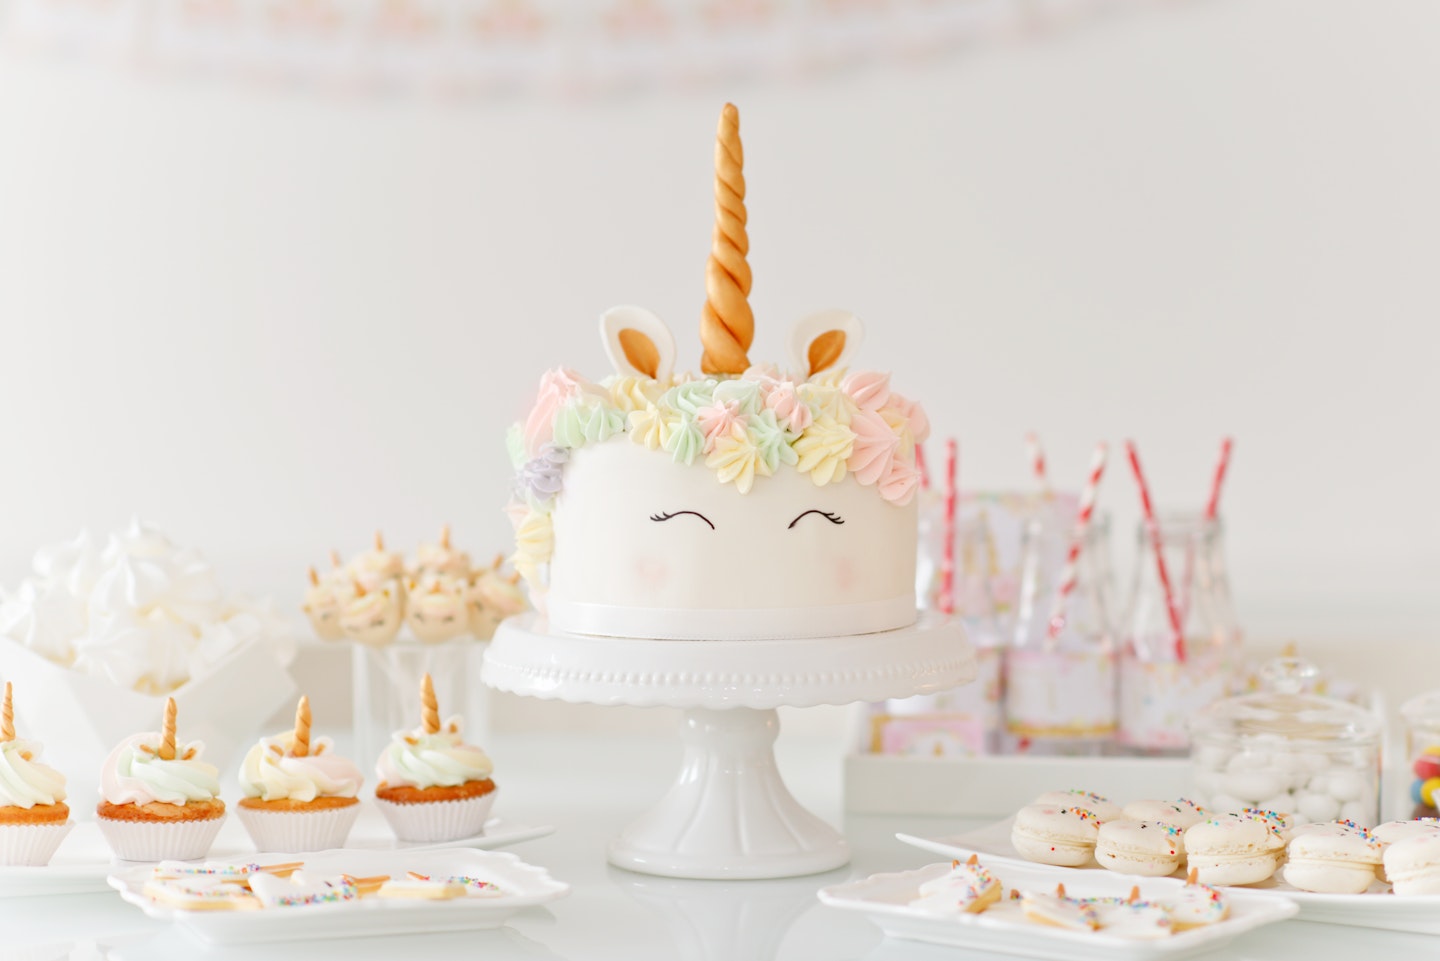 Attache Unicorn Theme Birthday Decorations items or kit (7 Happy